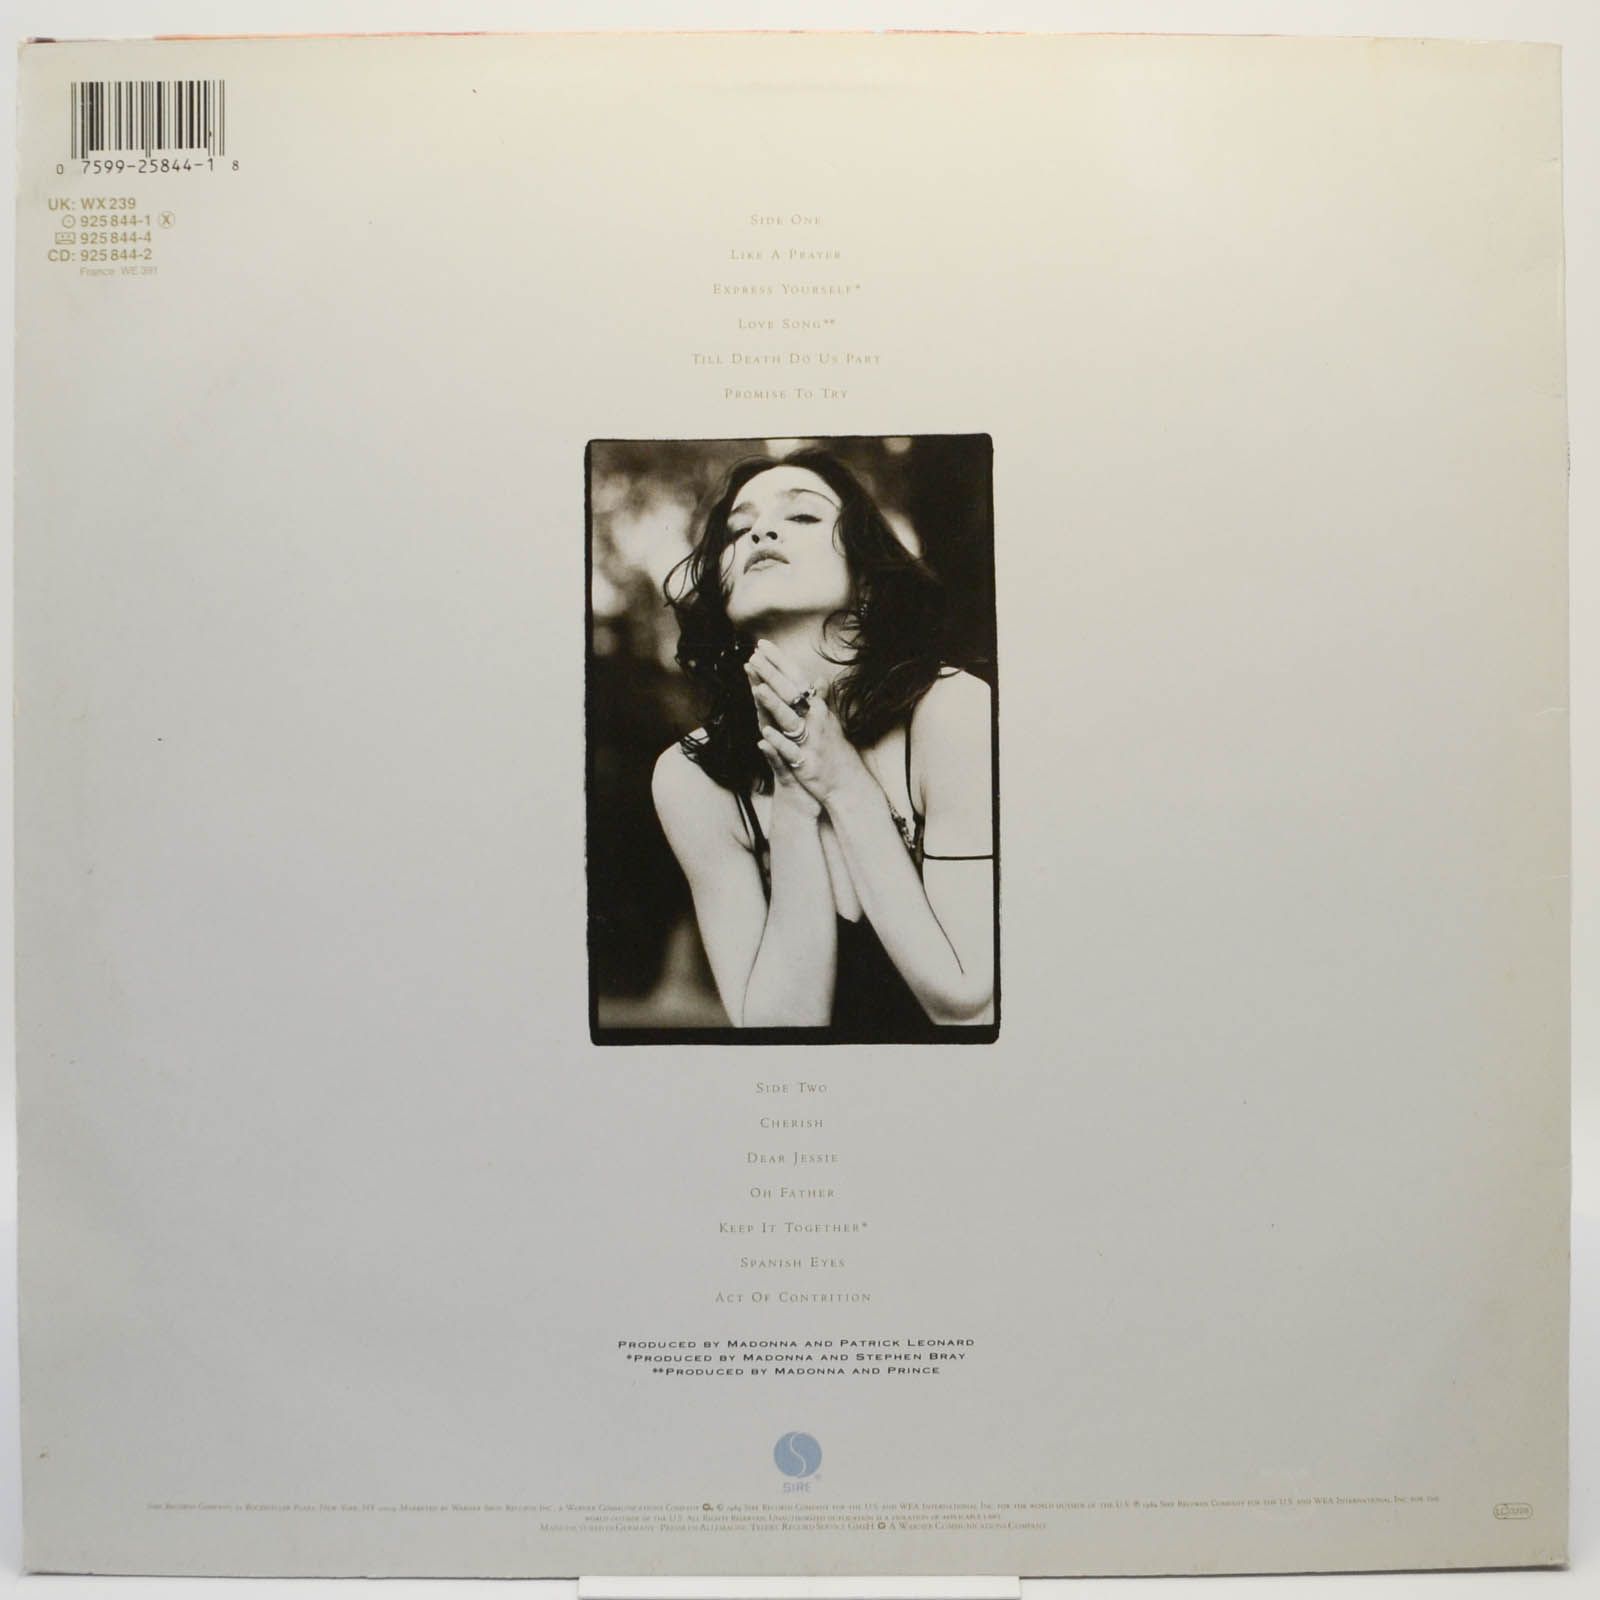 Madonna — Like A Prayer, 1989